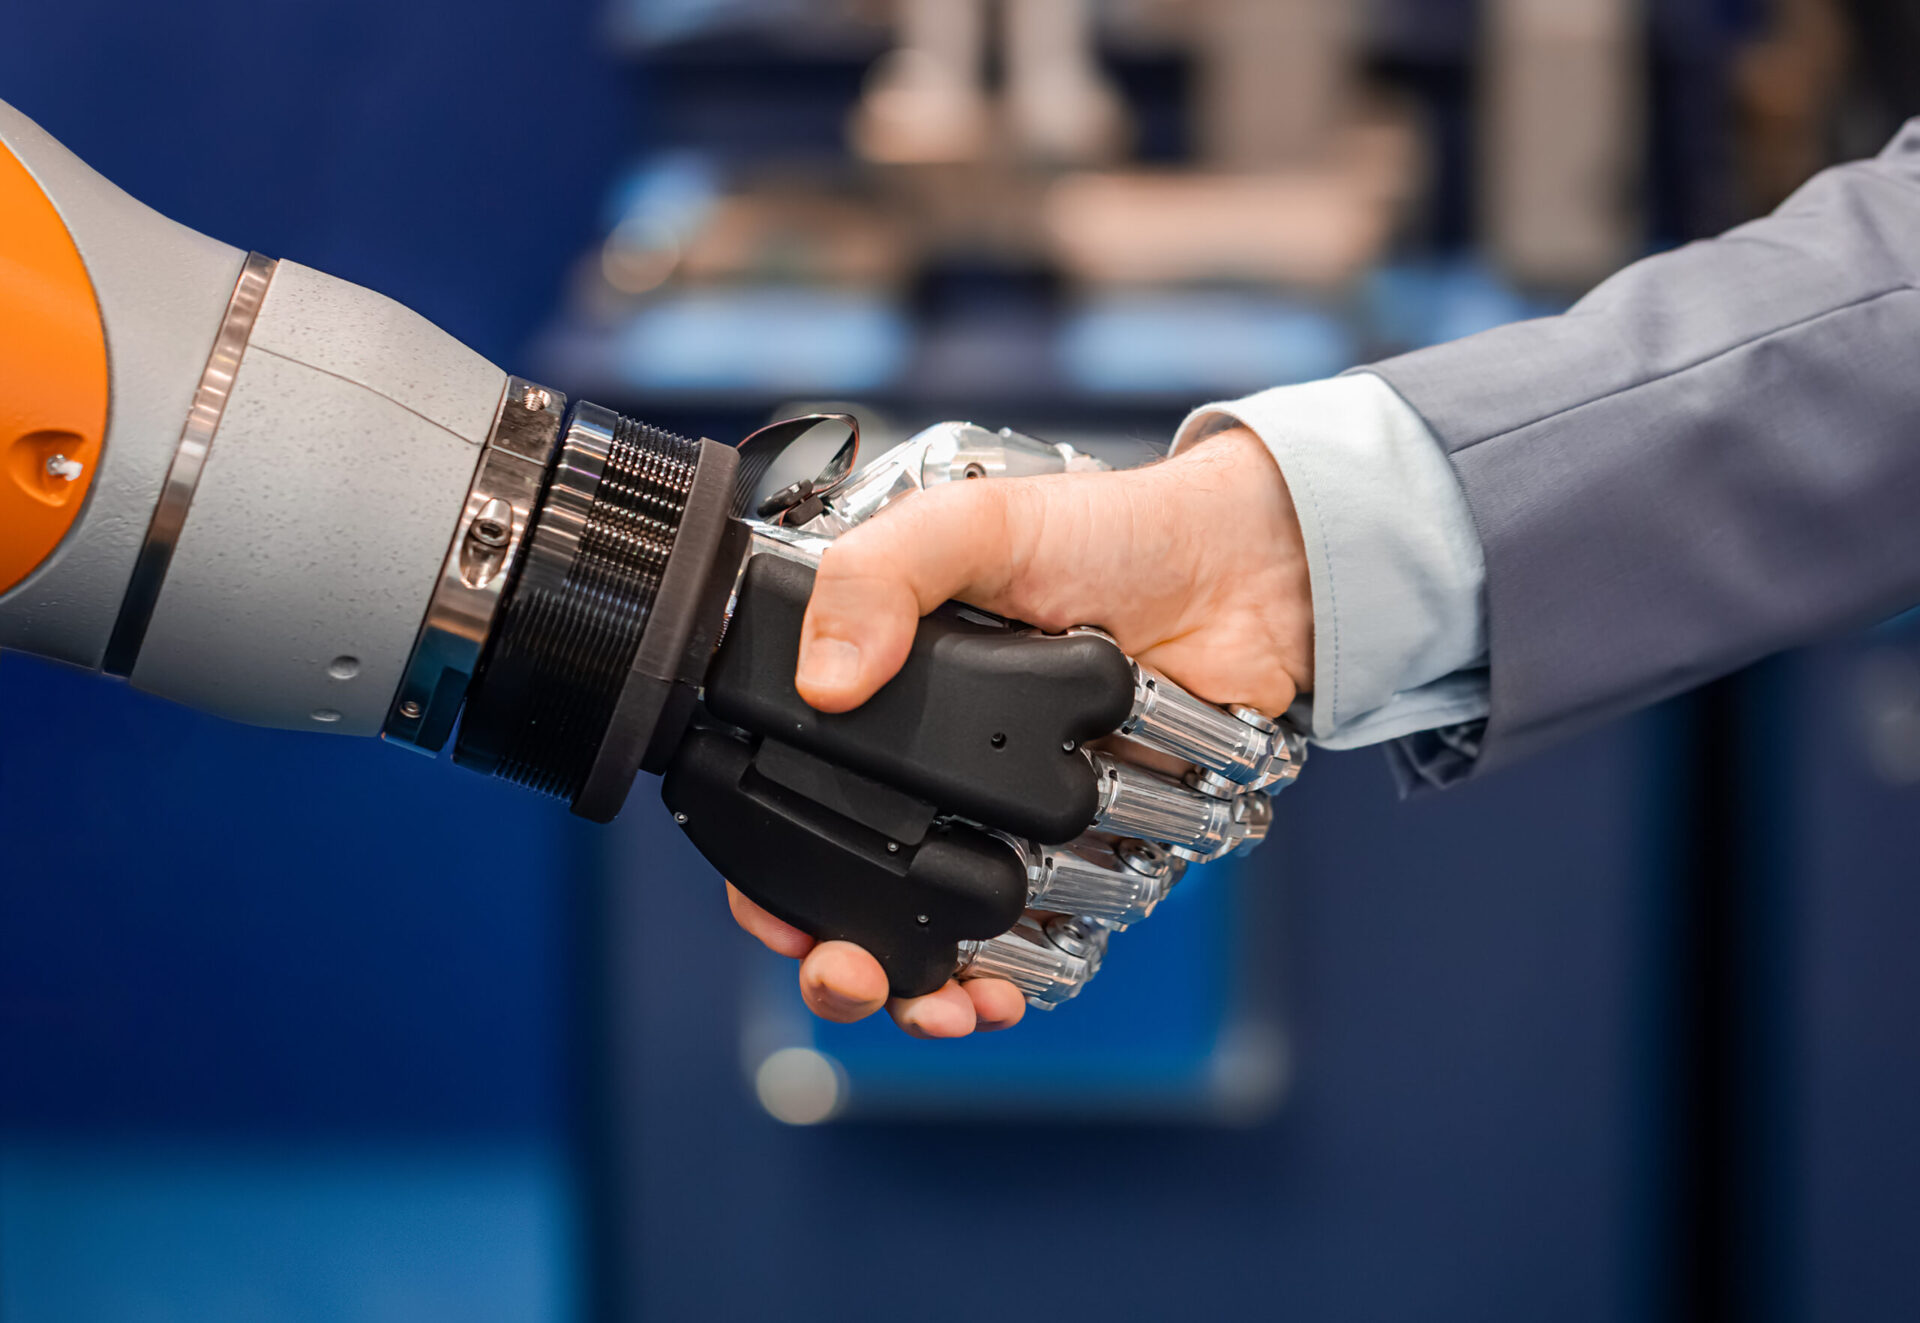 A hand shaking a robot hand